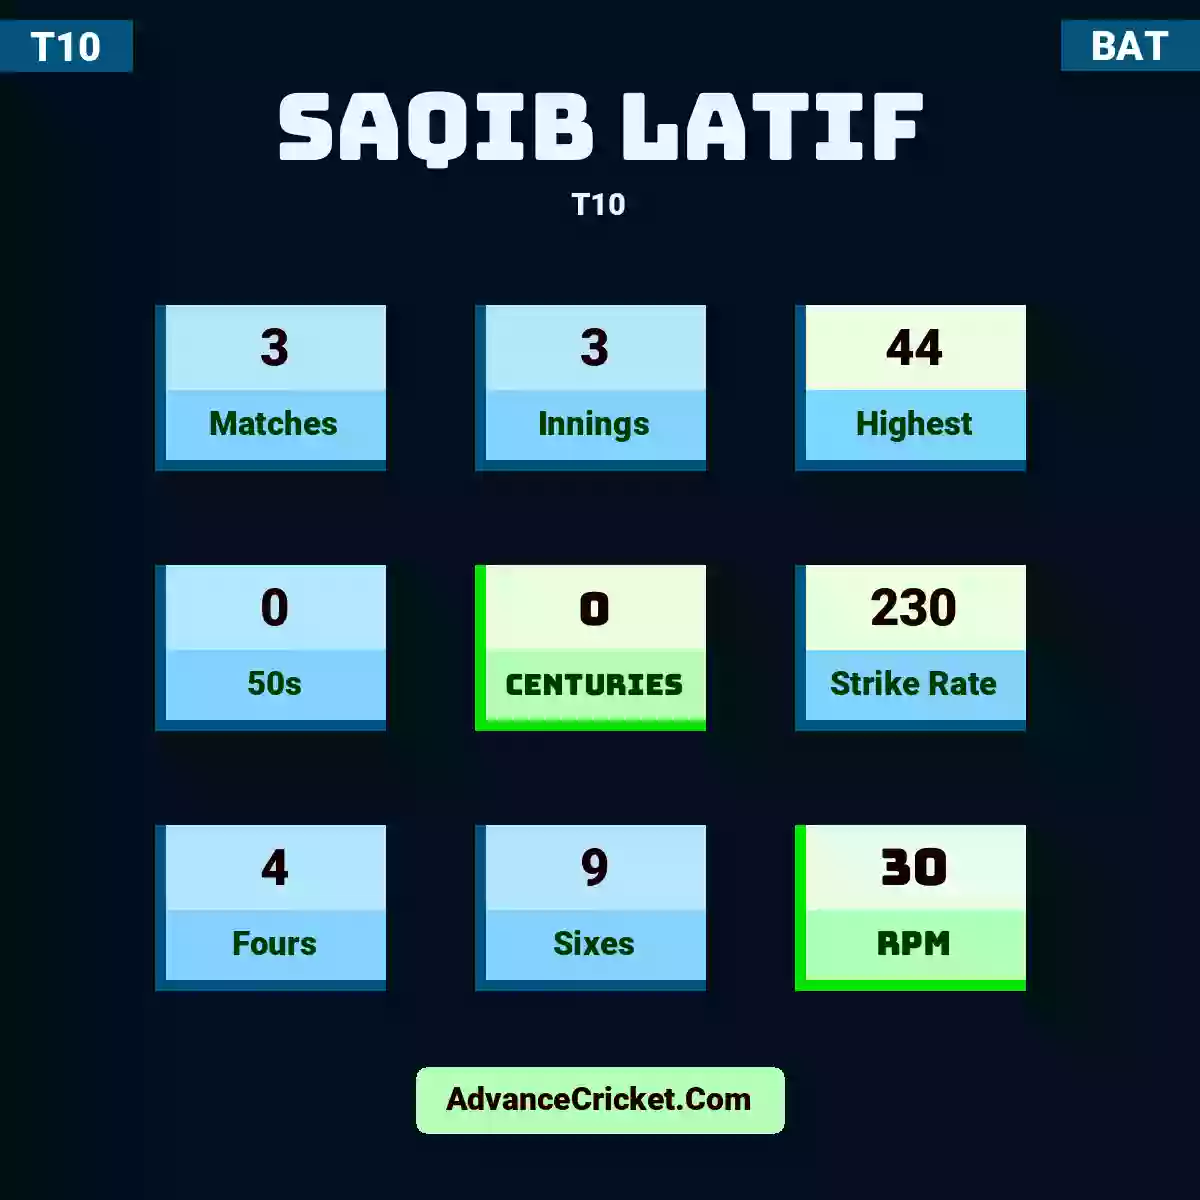 Saqib Latif T10 , Saqib Latif played 3 matches, scored 44 runs as highest, 0 half-centuries, and 0 centuries, with a strike rate of 230. S.Latif hit 4 fours and 9 sixes, with an RPM of 30.